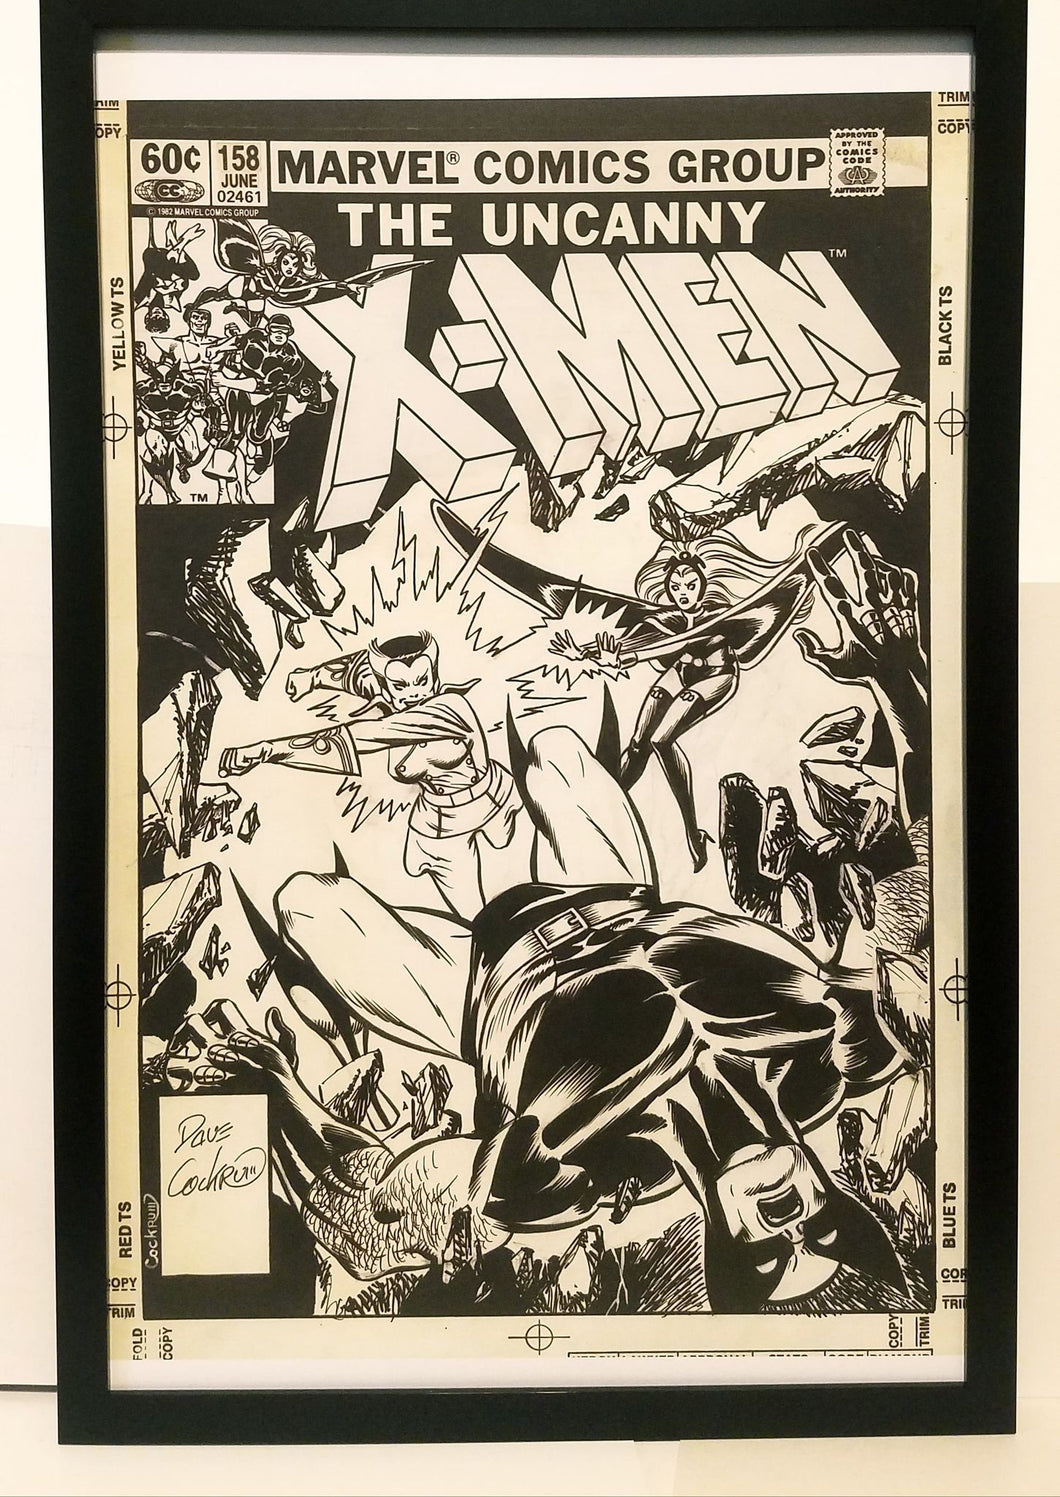 Uncanny X-Men #158 by Dave Cockrum 11x17 FRAMED Original Art Poster Marvel Comics